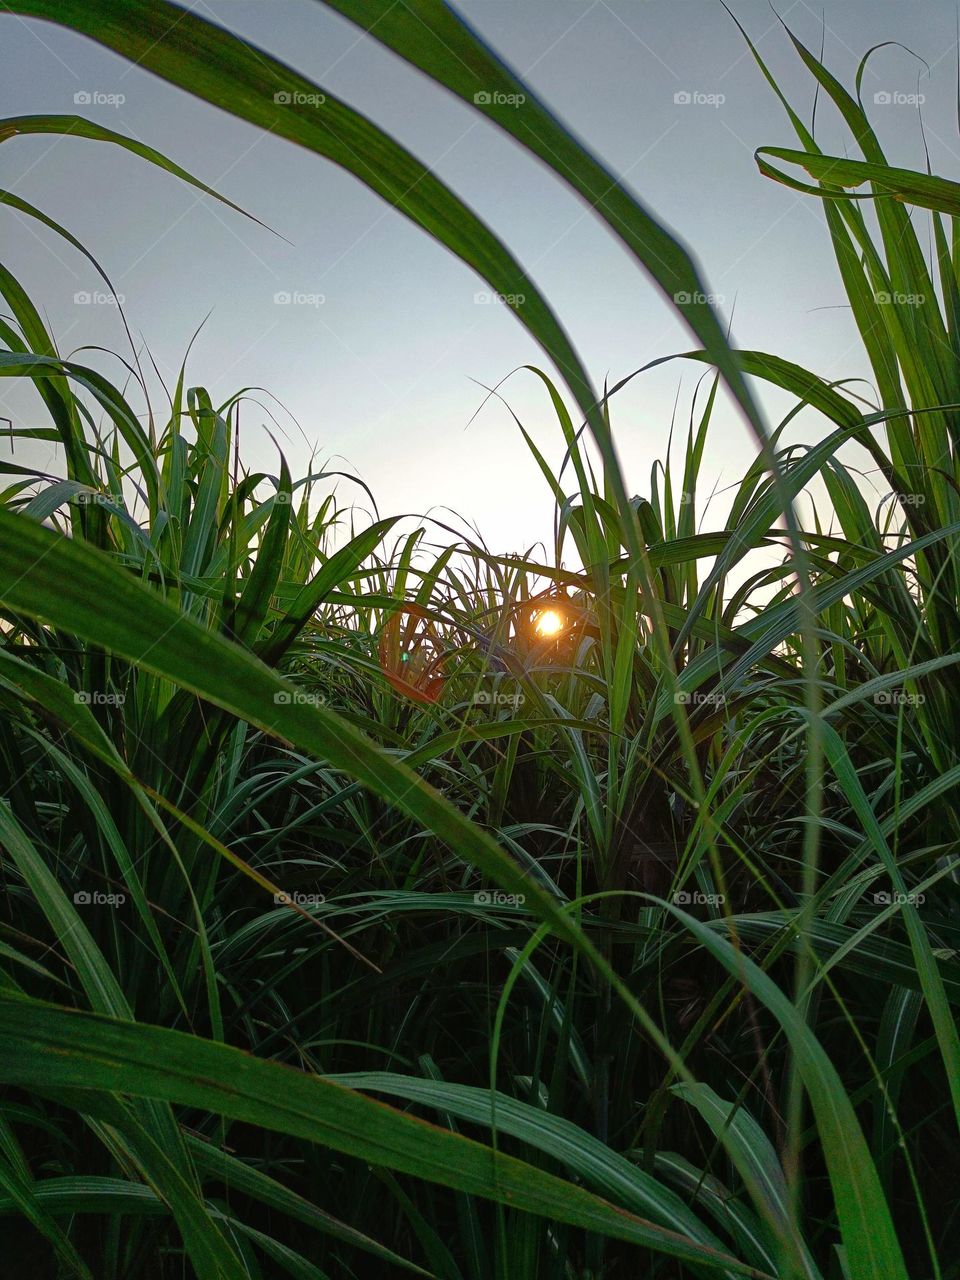 sunlight peaking through sugarcane leaves in the morning.